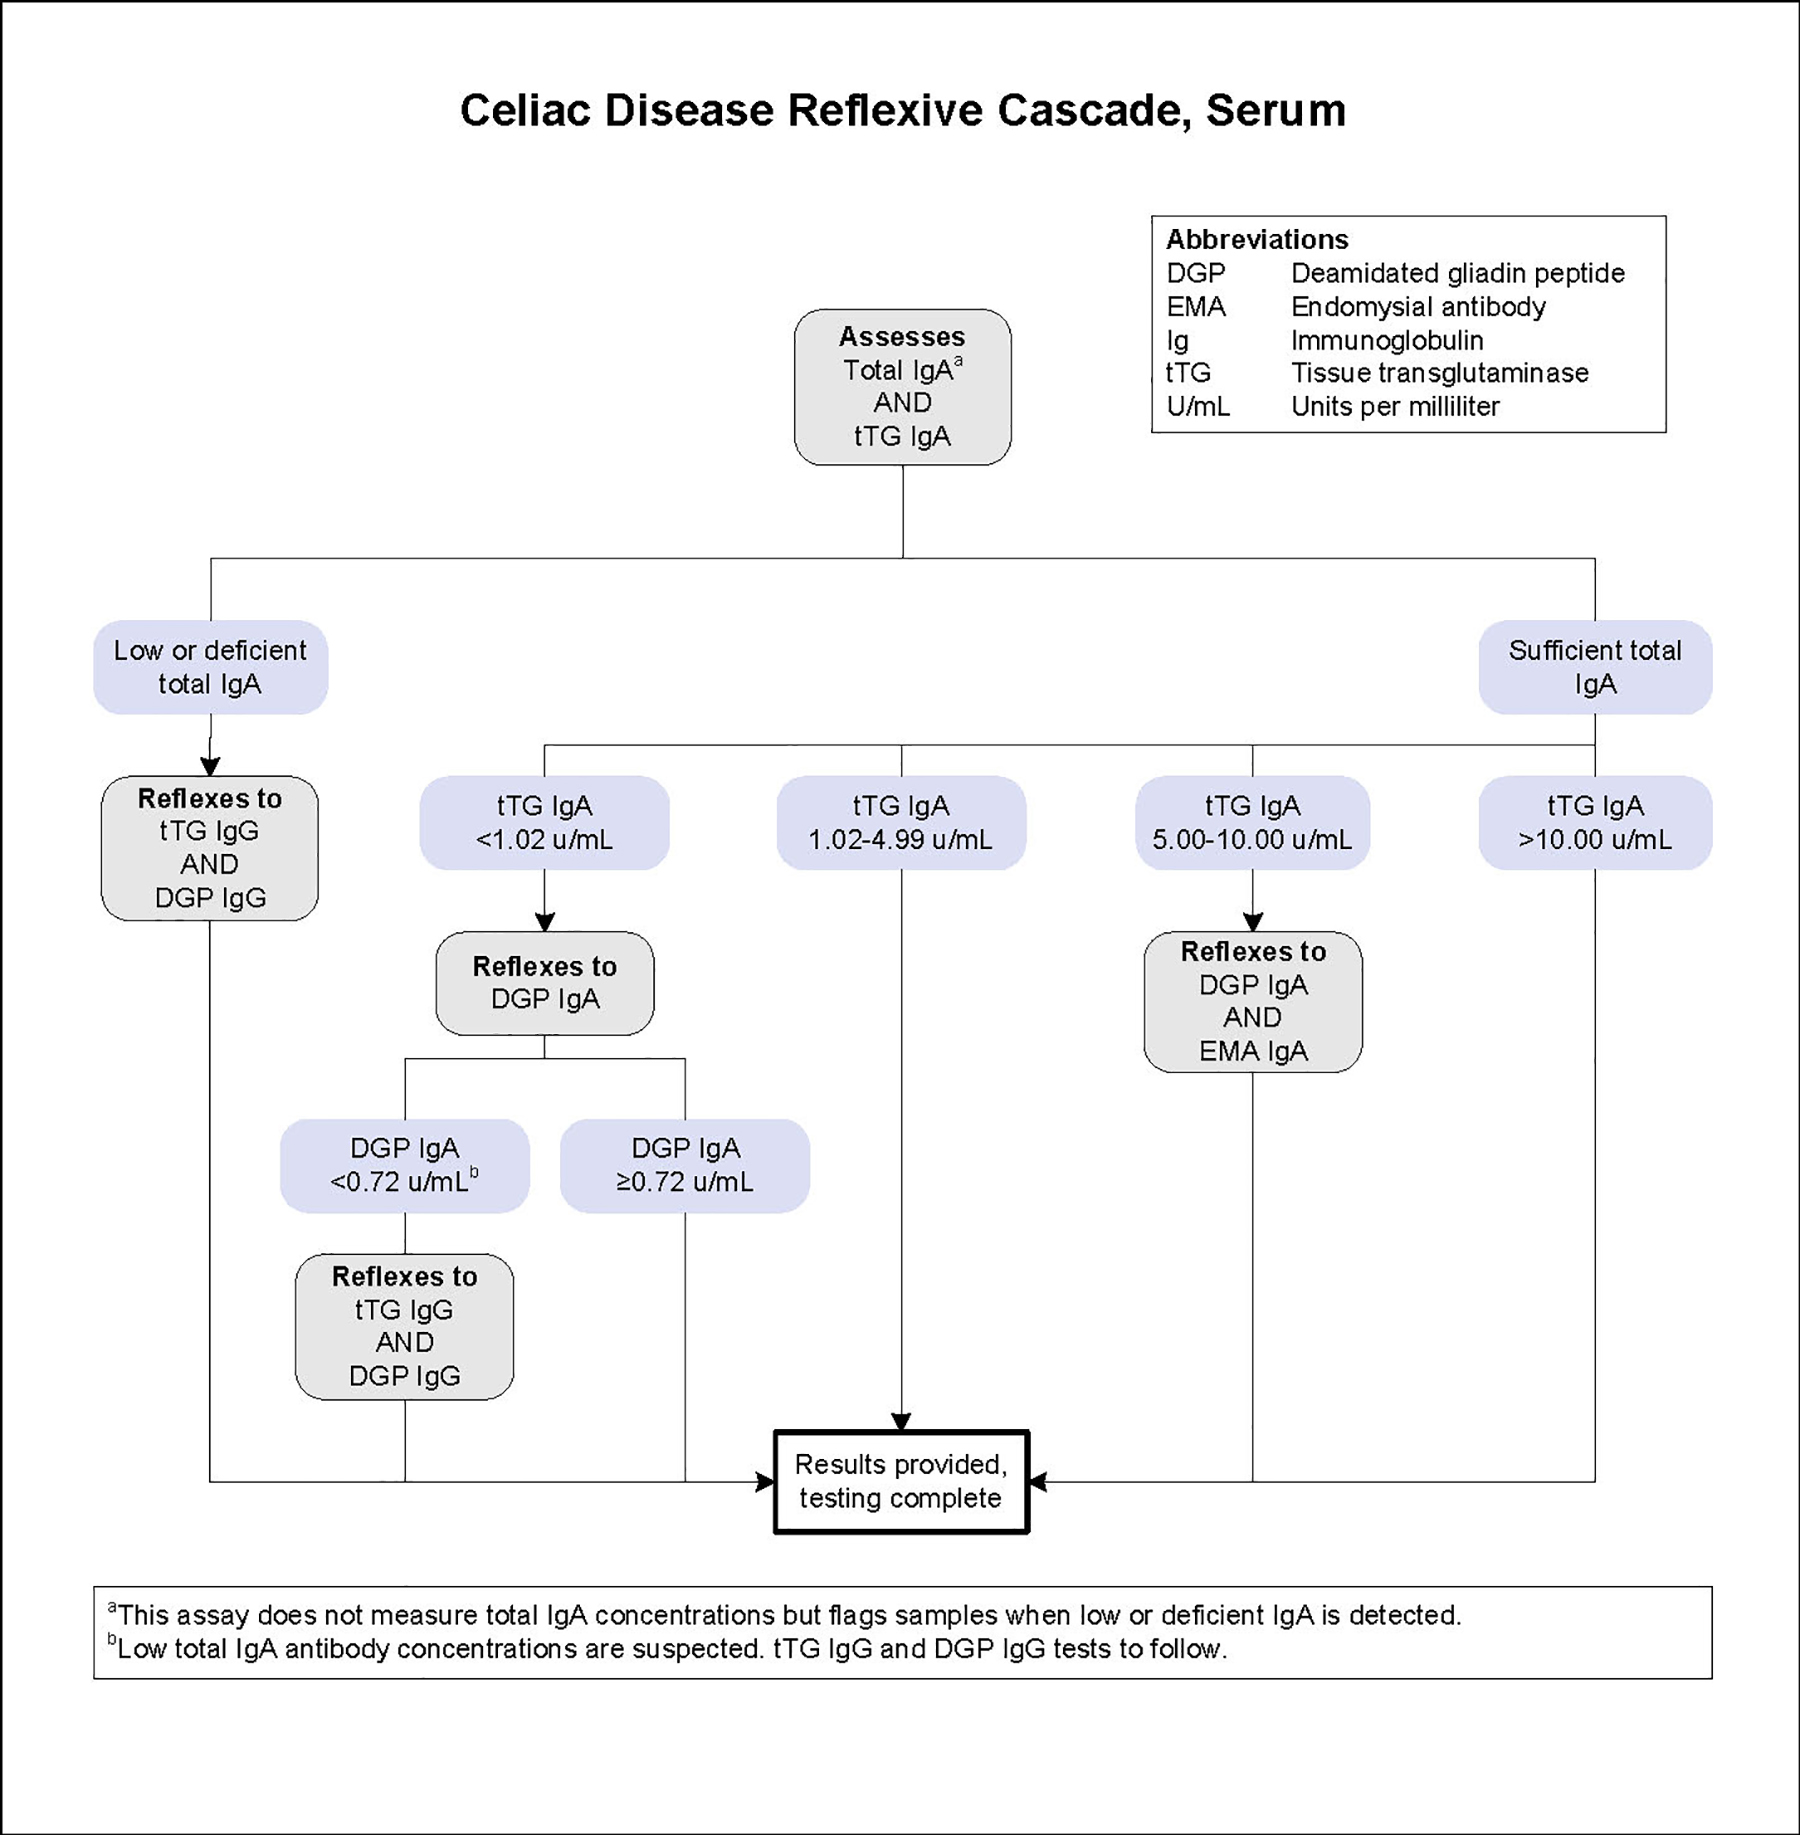 Flowchart for Celiac Disease Reflexive Cascade